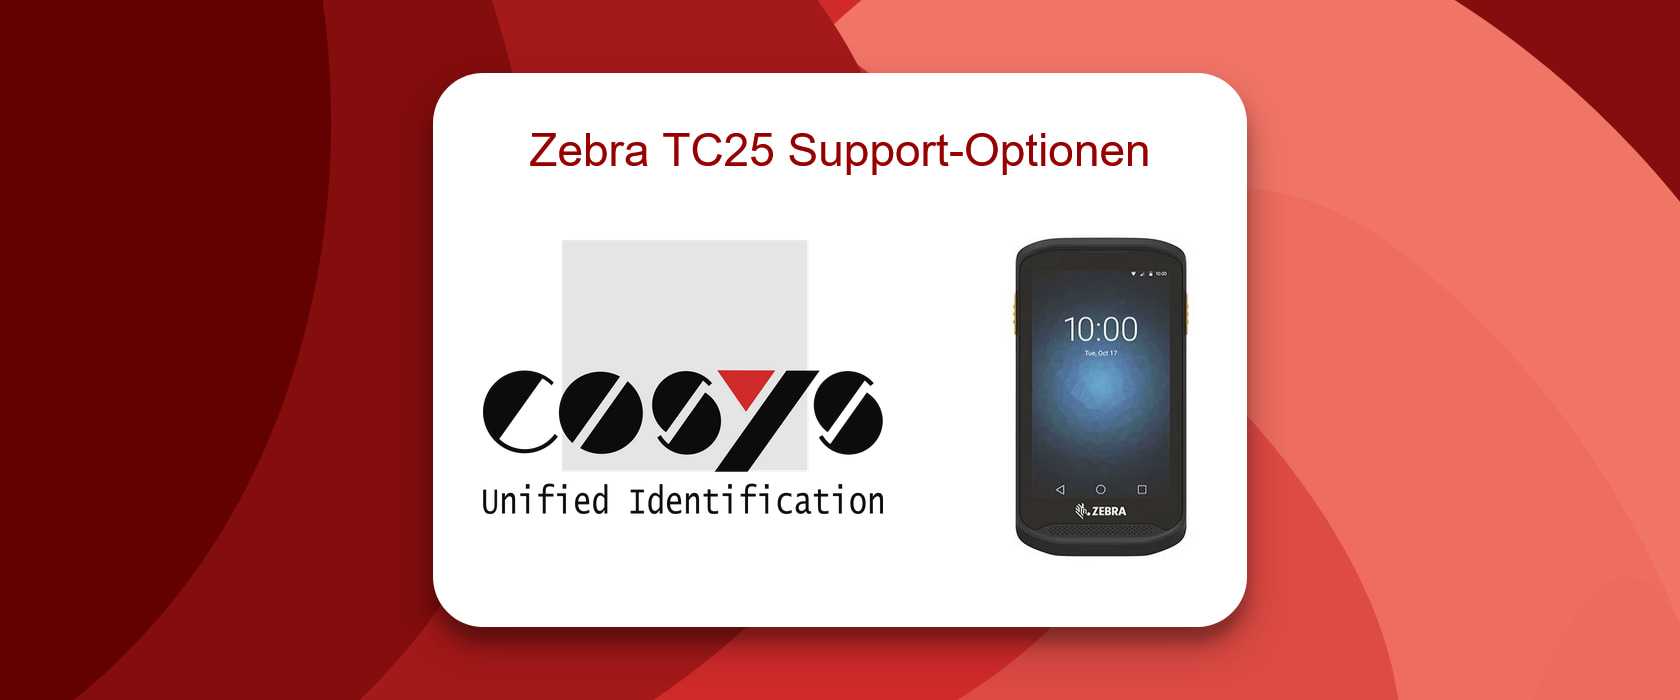 Zebra TC25 Support